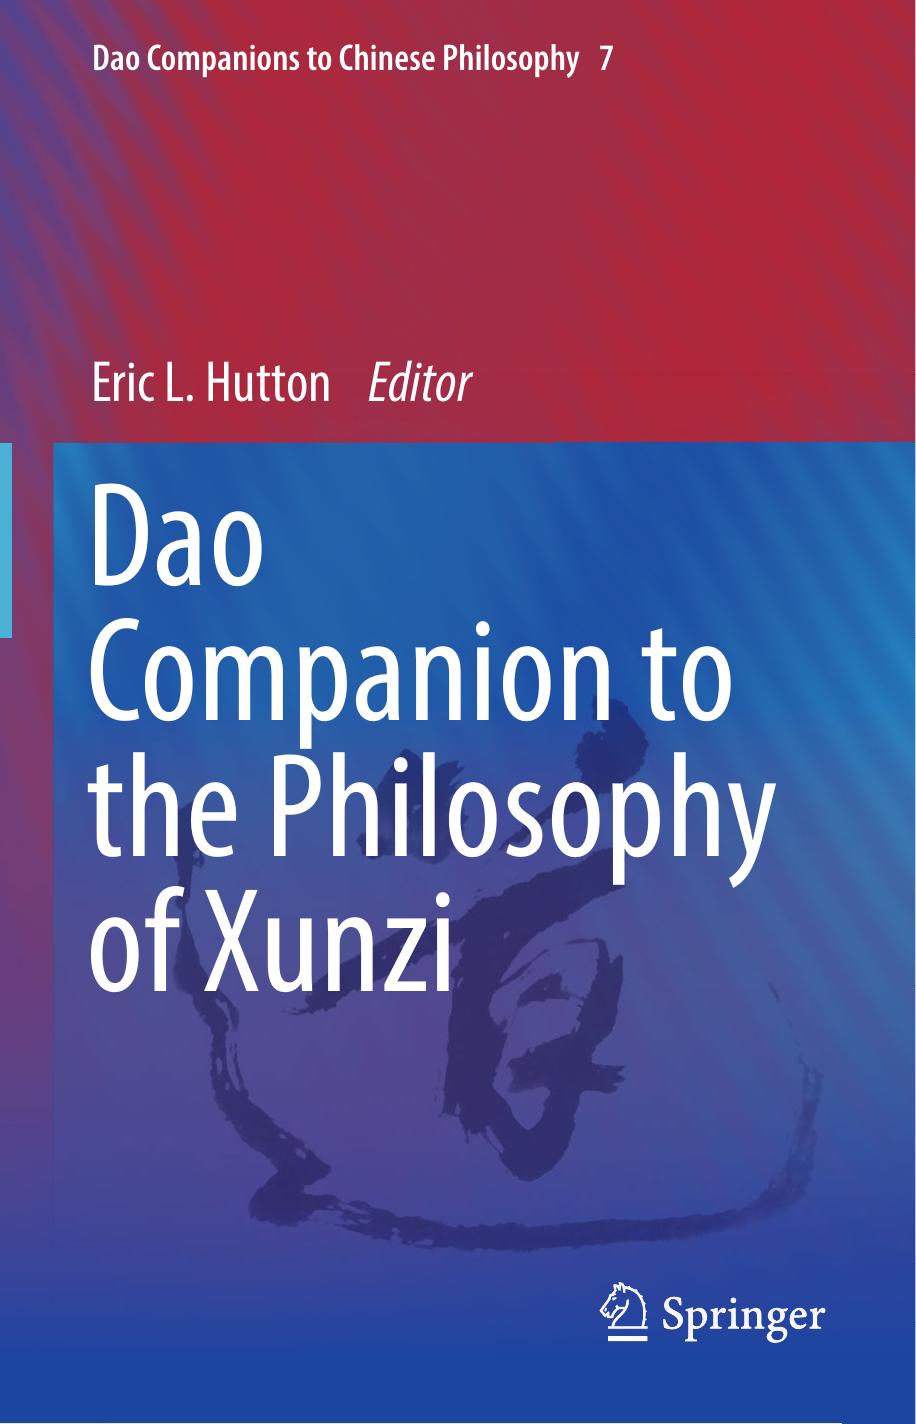 Dao Companion to the Philosophy of Xunzi